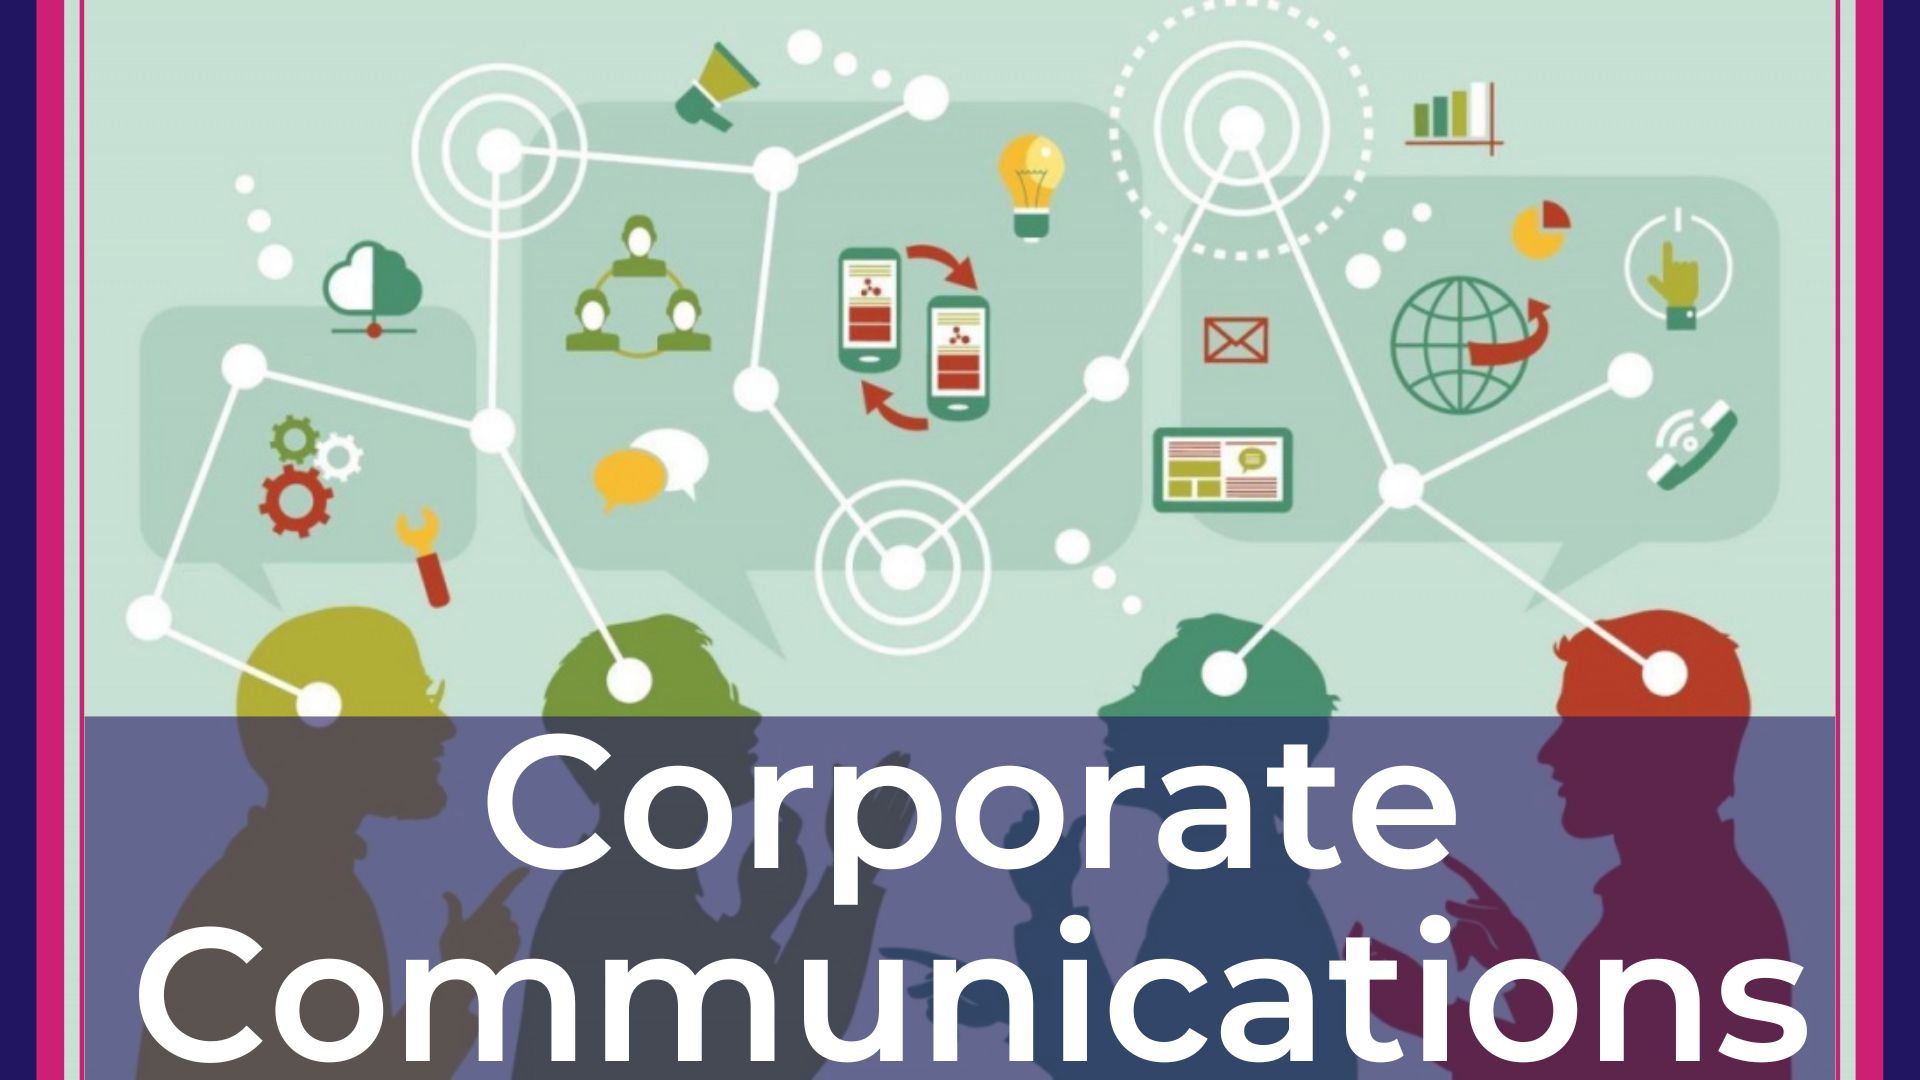 Corporate Communications - Truyền thông doanh nghiệp